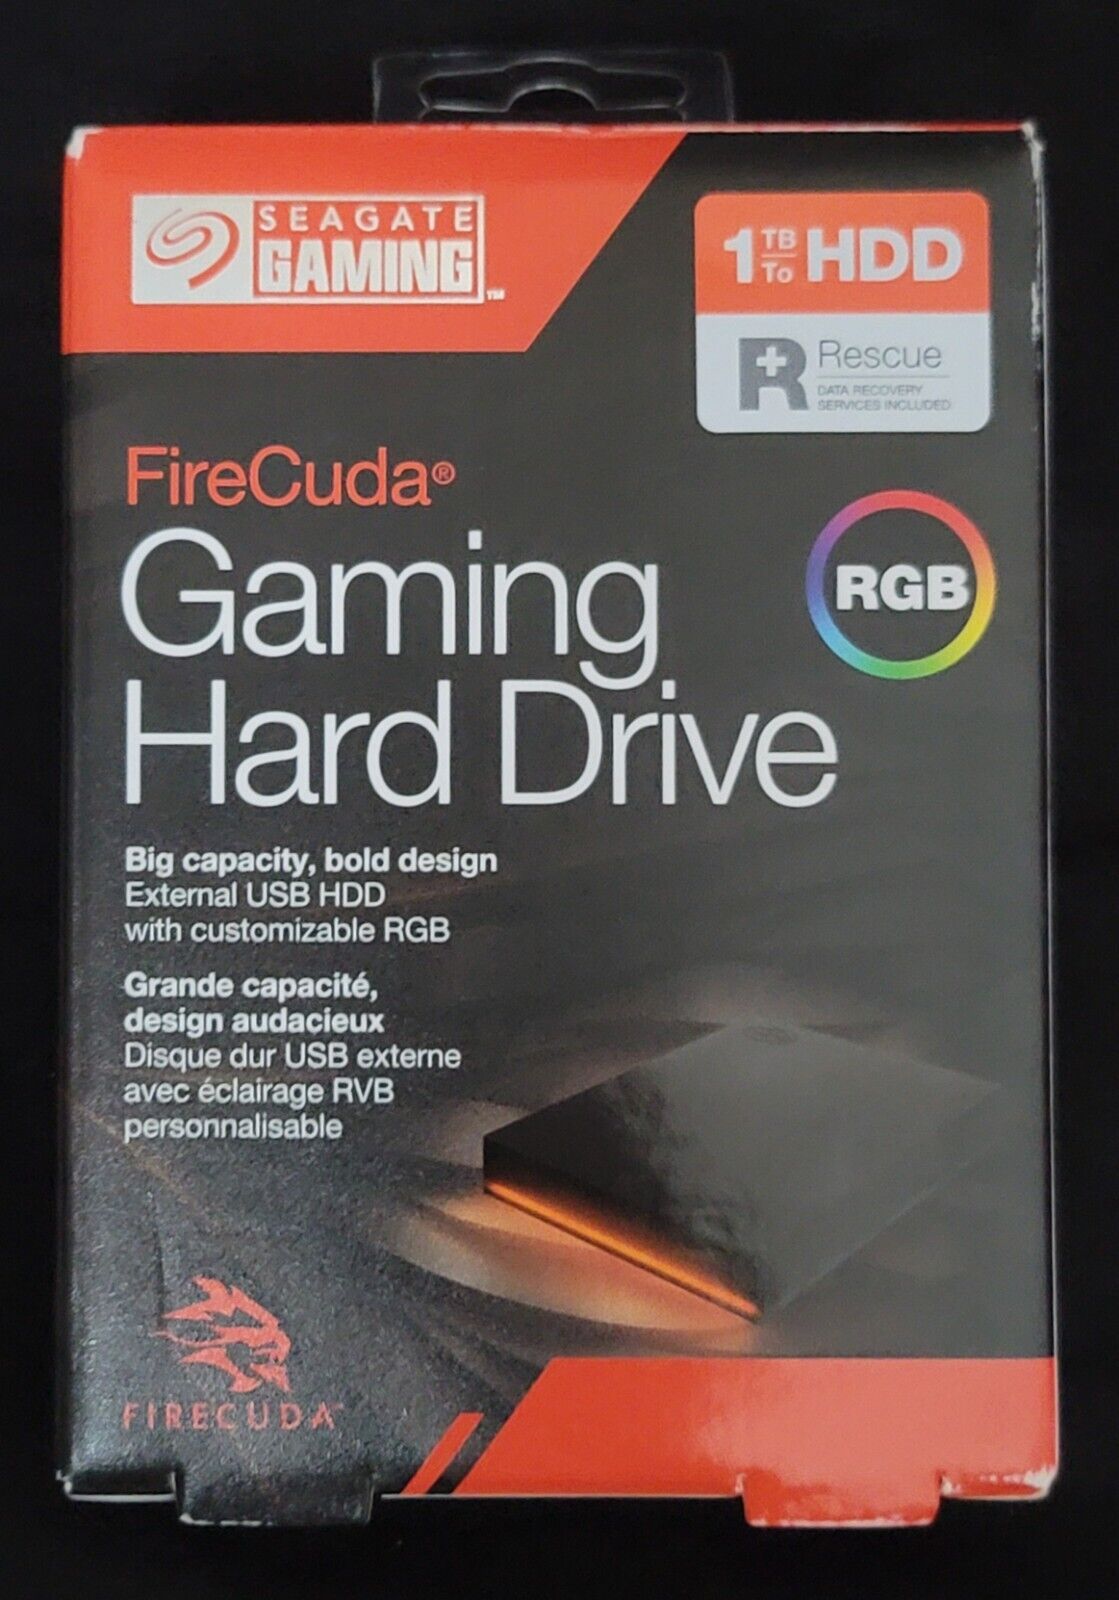 Seagate 1TB FireCuda Portable Hard Drive for PC Gaming - Black/Orange